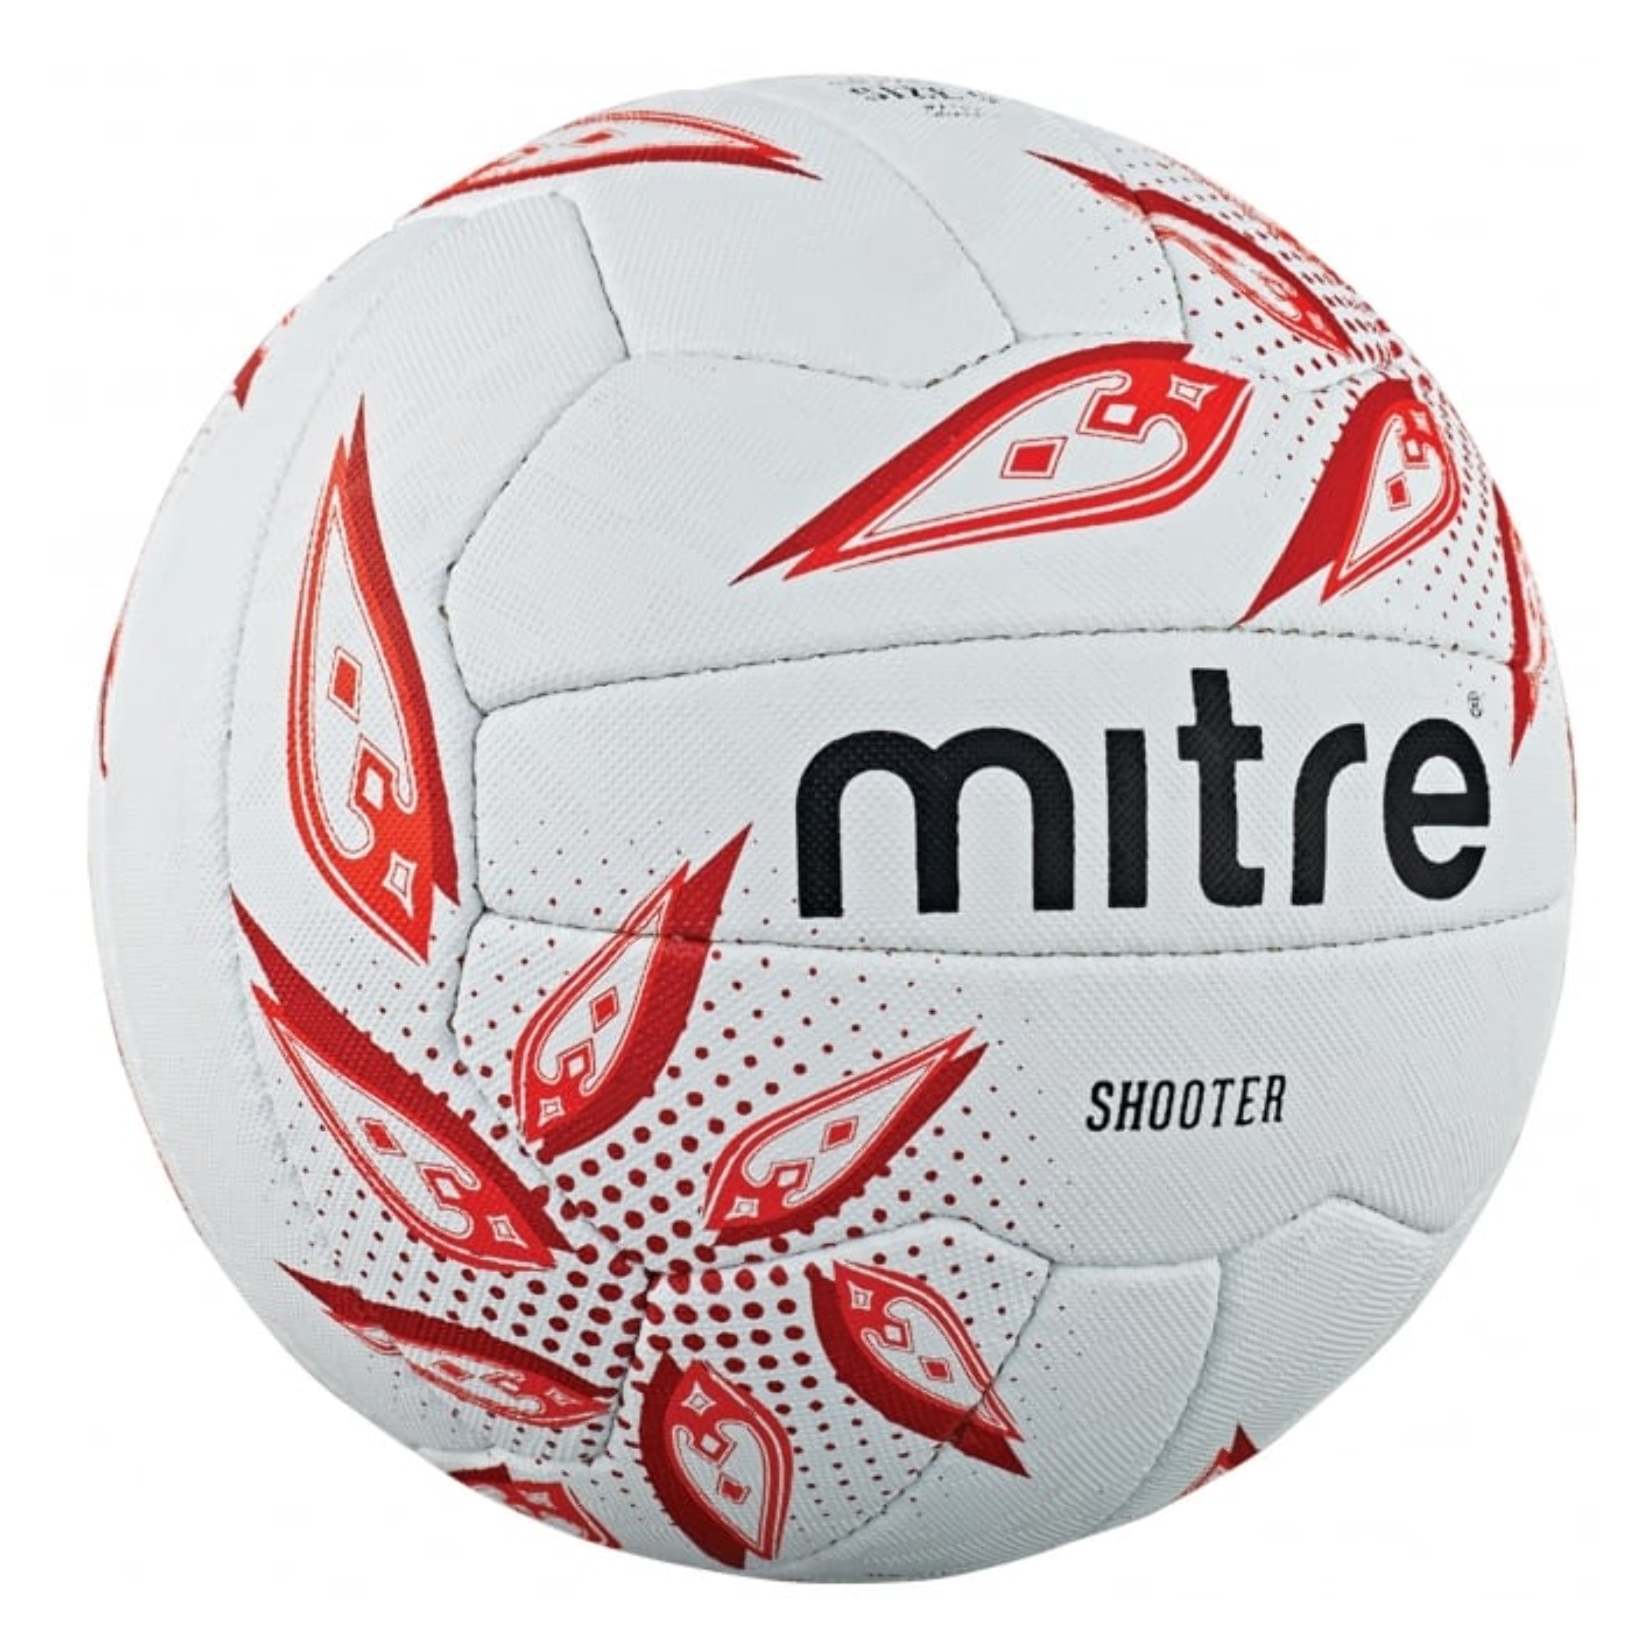 Precision Mitre Shooter Netball